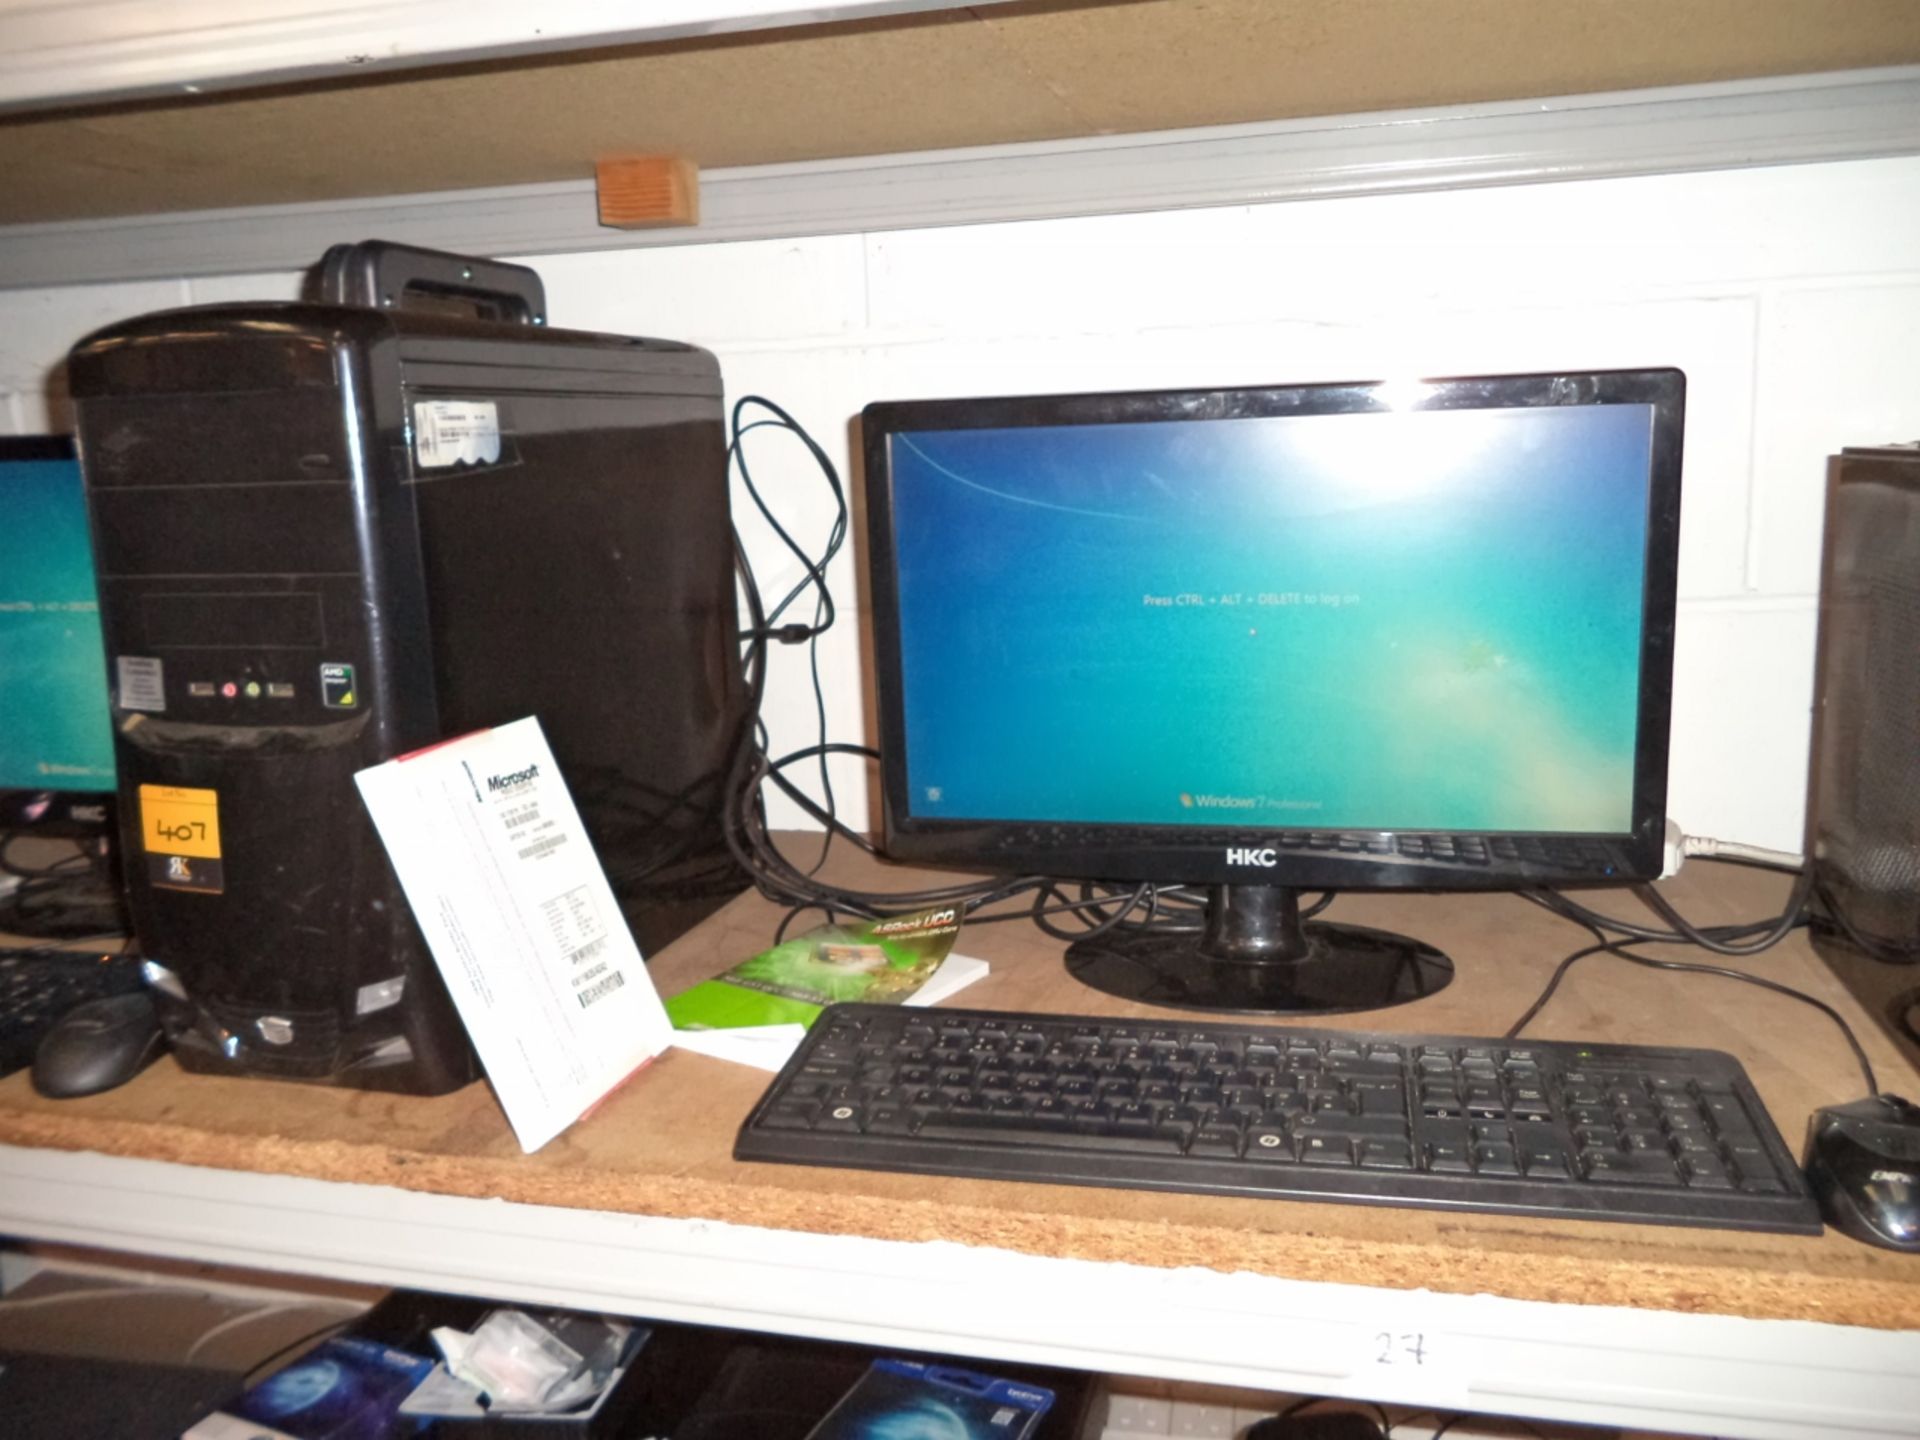 Desktop computer with AMD Sempron 140 processor @ 2.7GHz, 4Gb RAM, 250Gb HDD, DVD multi recorder,